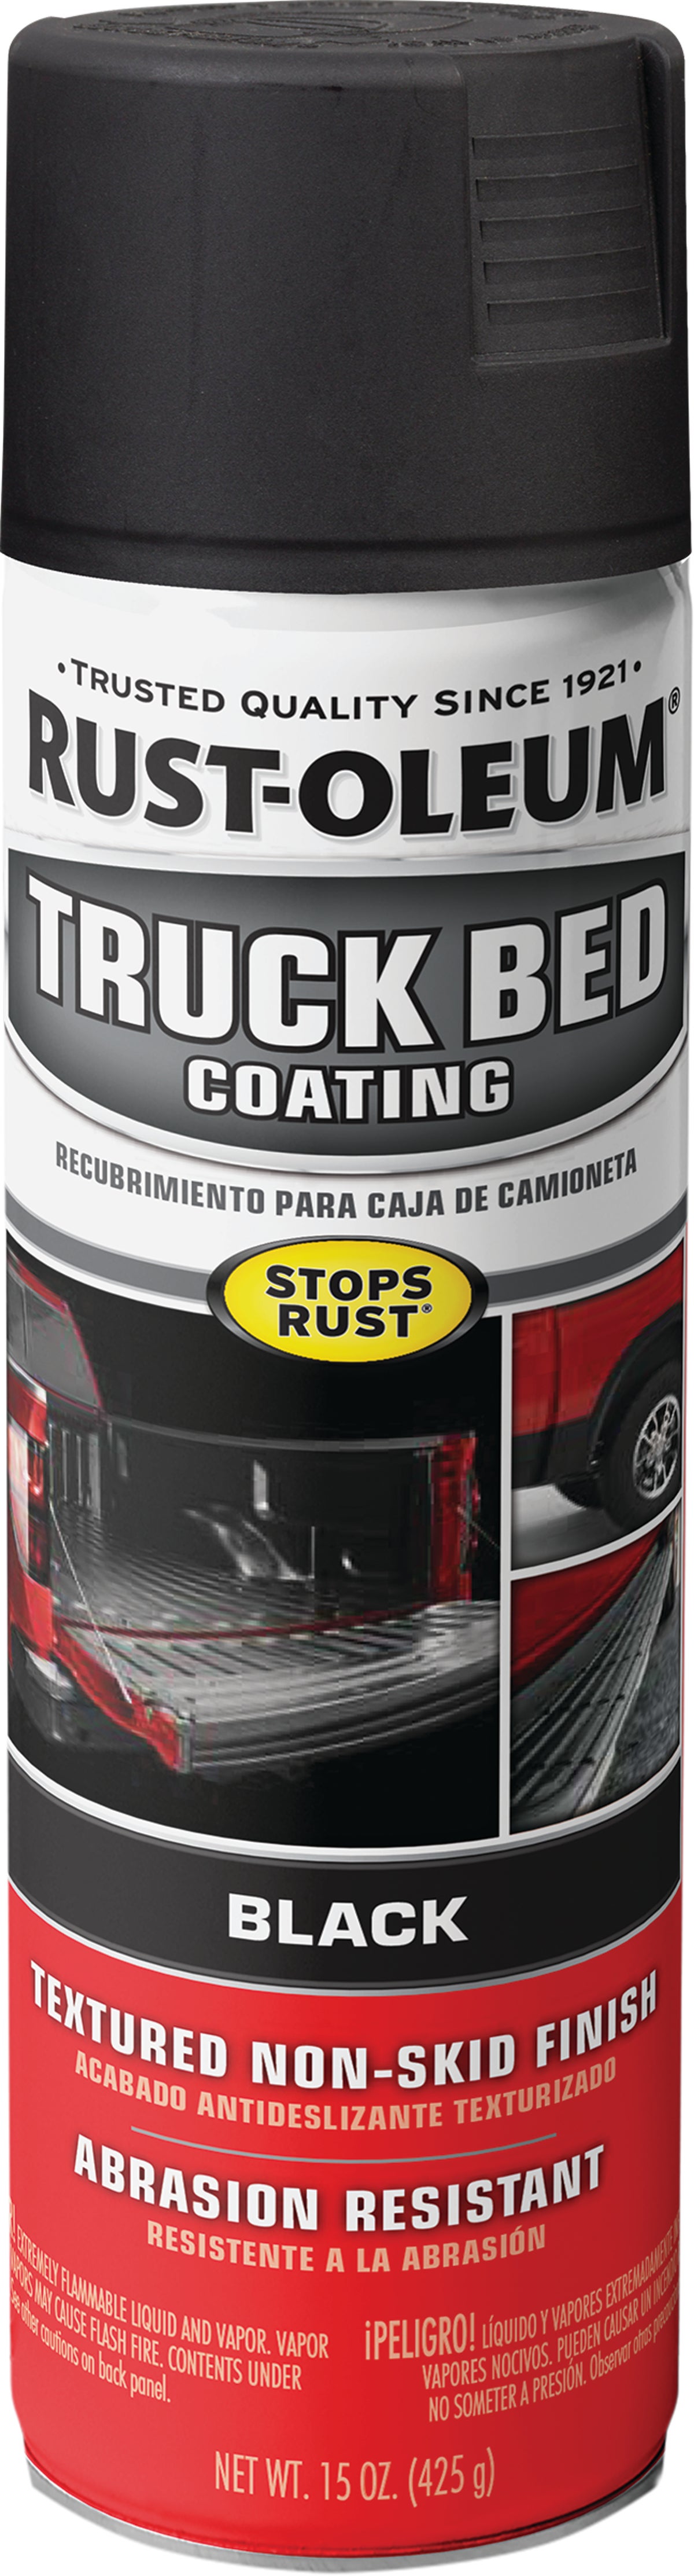 Rust-Oleum Pro Grade Turbo 24 Oz. Black Truck Bed Liner Spray - Clark Devon  Hardware